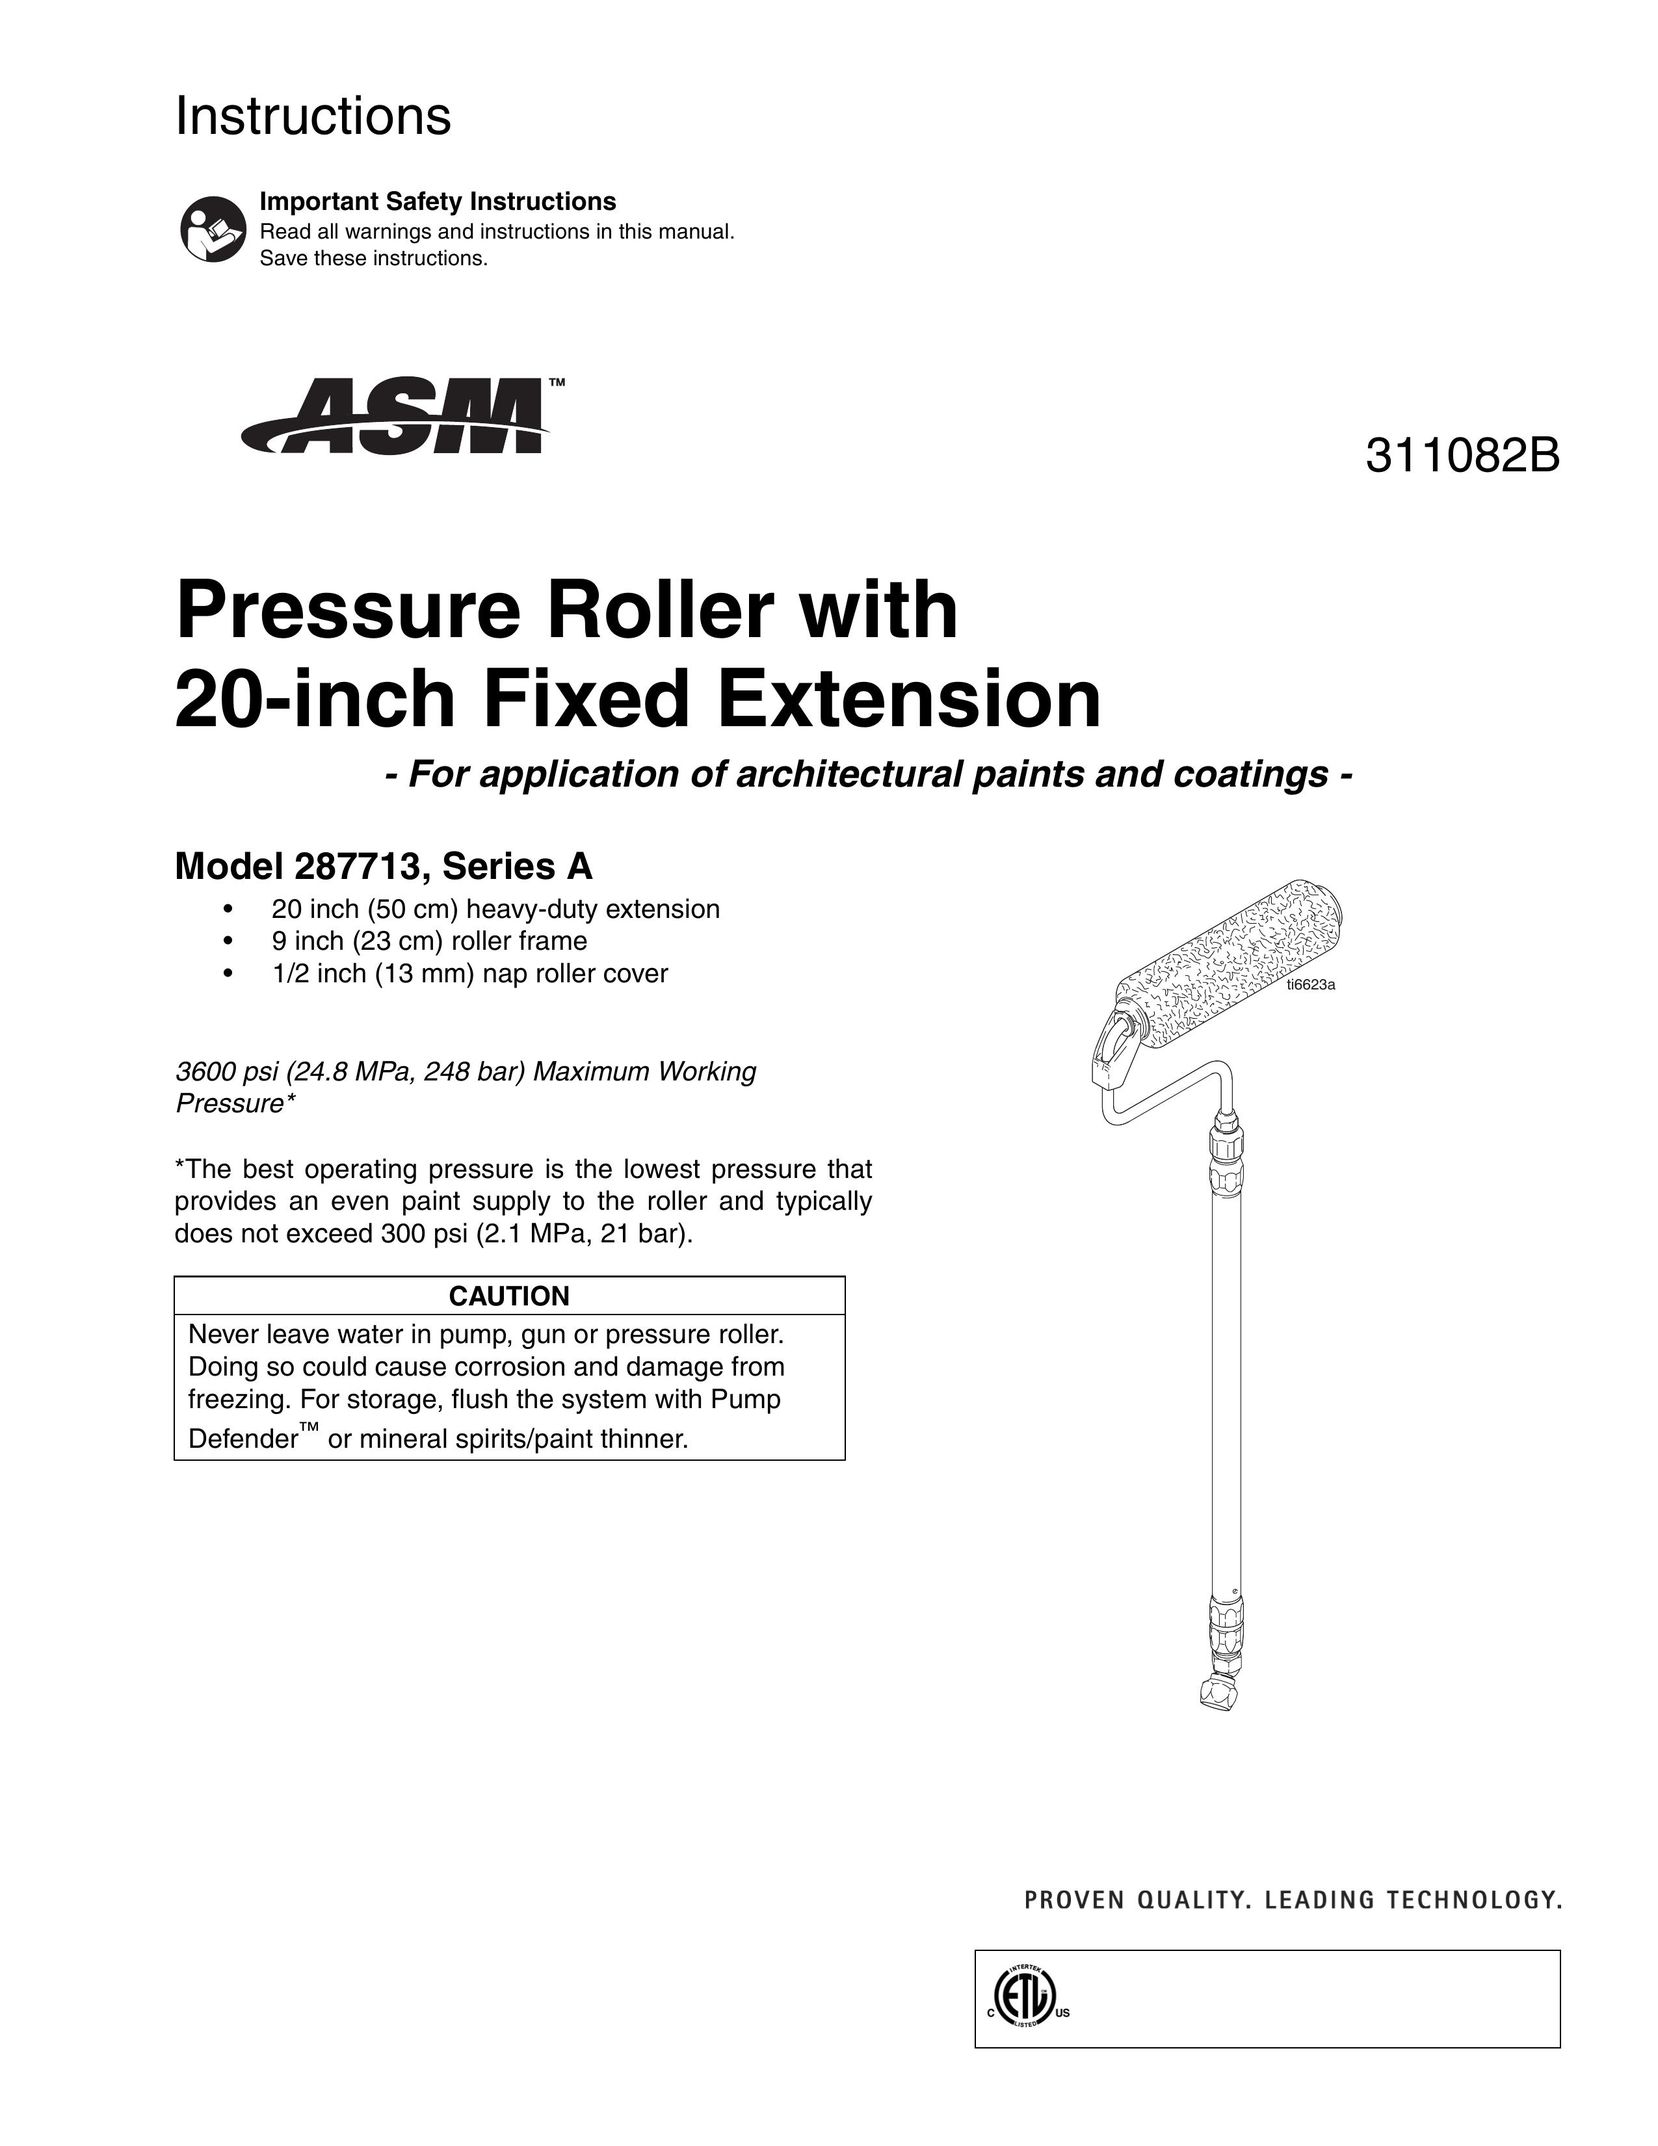 Graco Inc. 287713 Power Roller User Manual